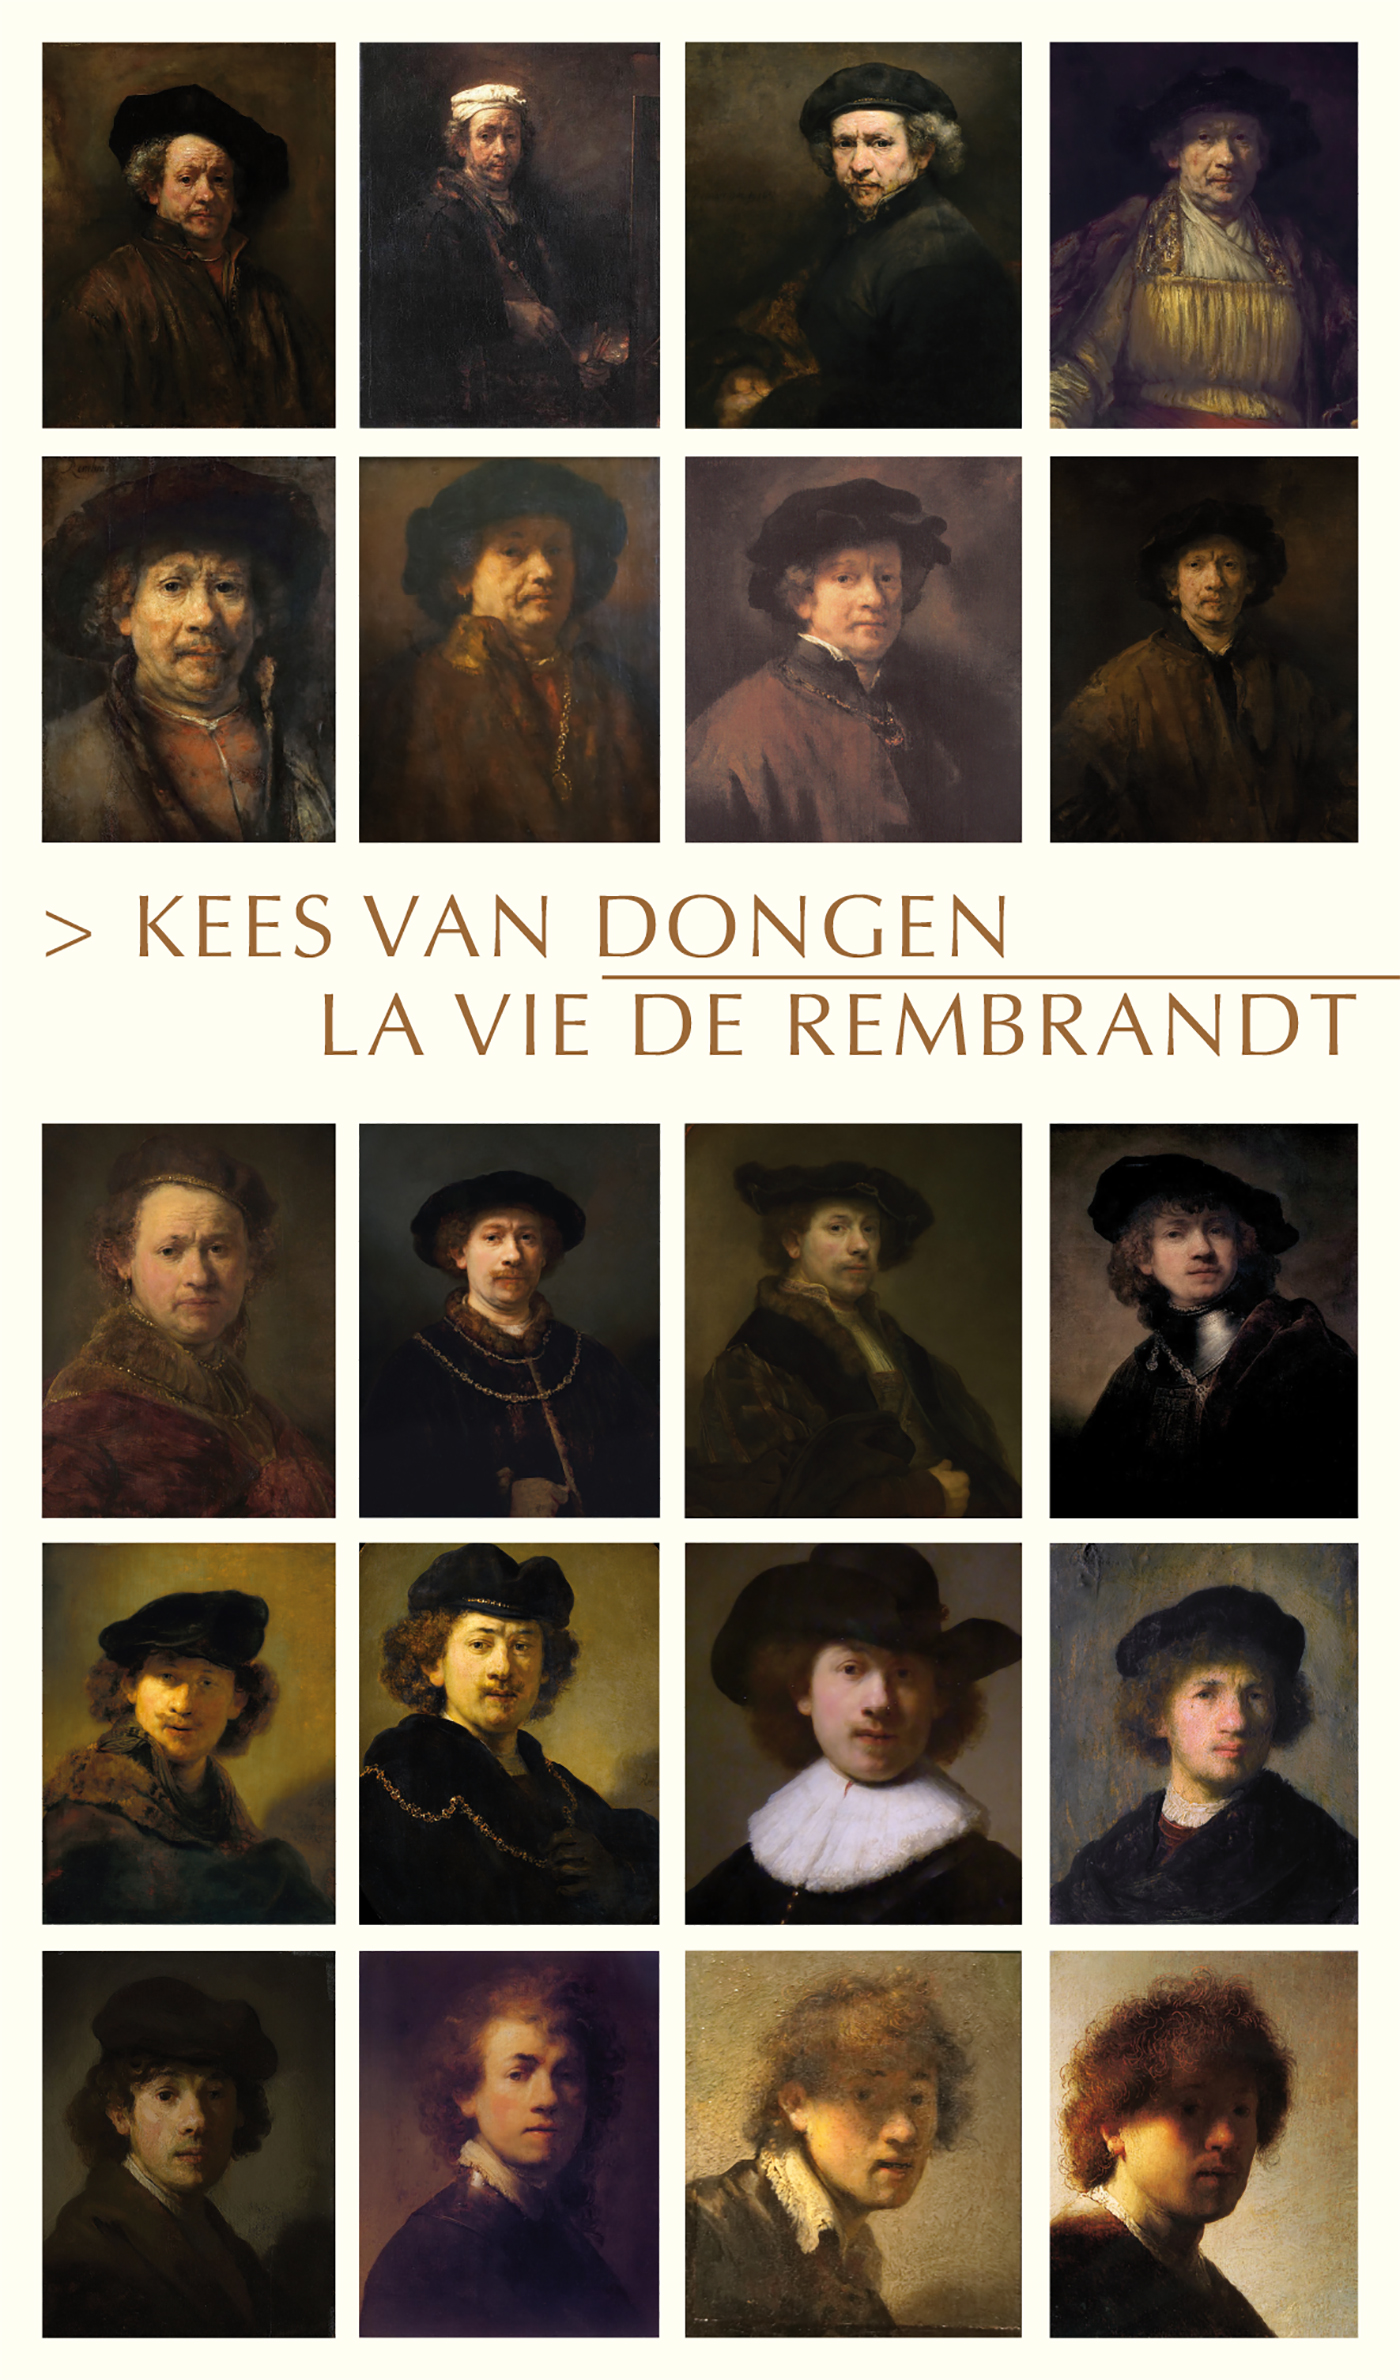 La Vie de Rembrandt